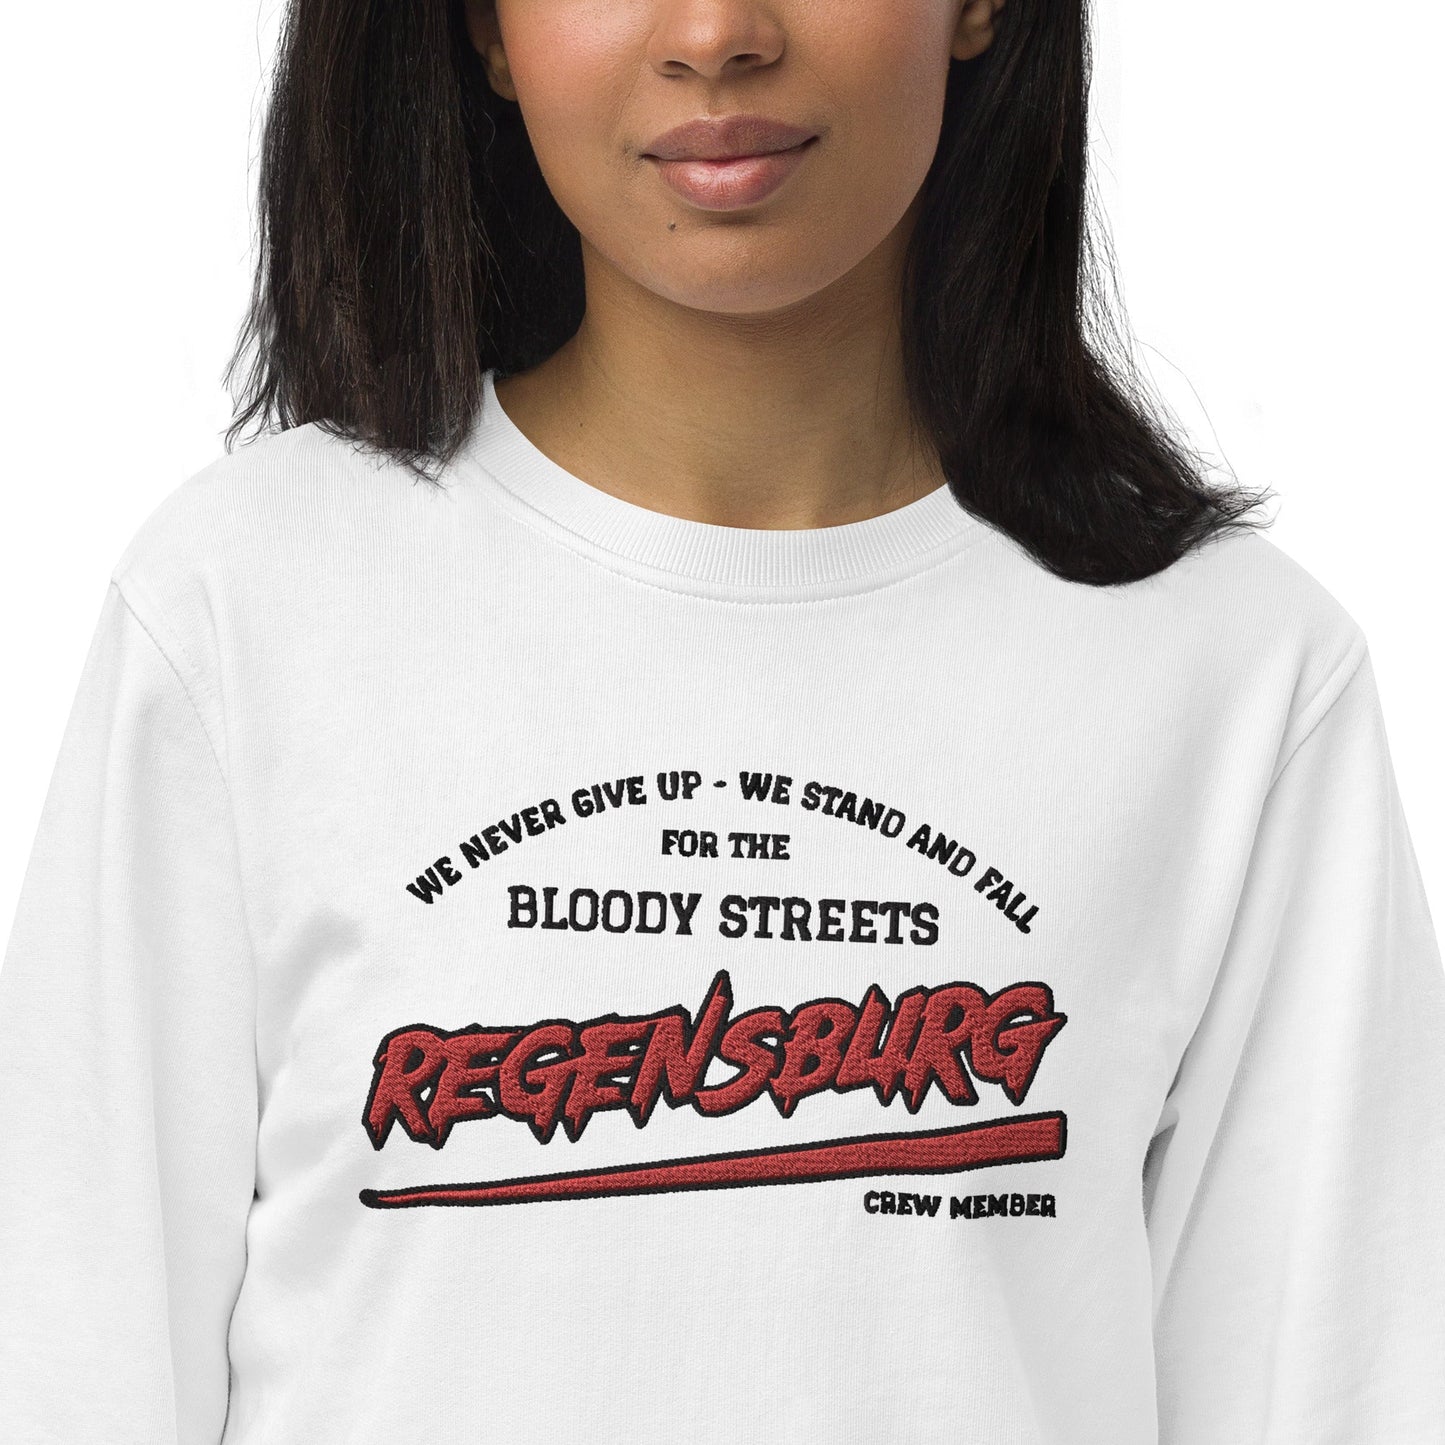 BS CITY Regensburg Crew Member Premium Red "Lady" Pullover - BLOODY-STREETS.DE Streetwear Herren und Damen Hoodies, T-Shirts, Pullis